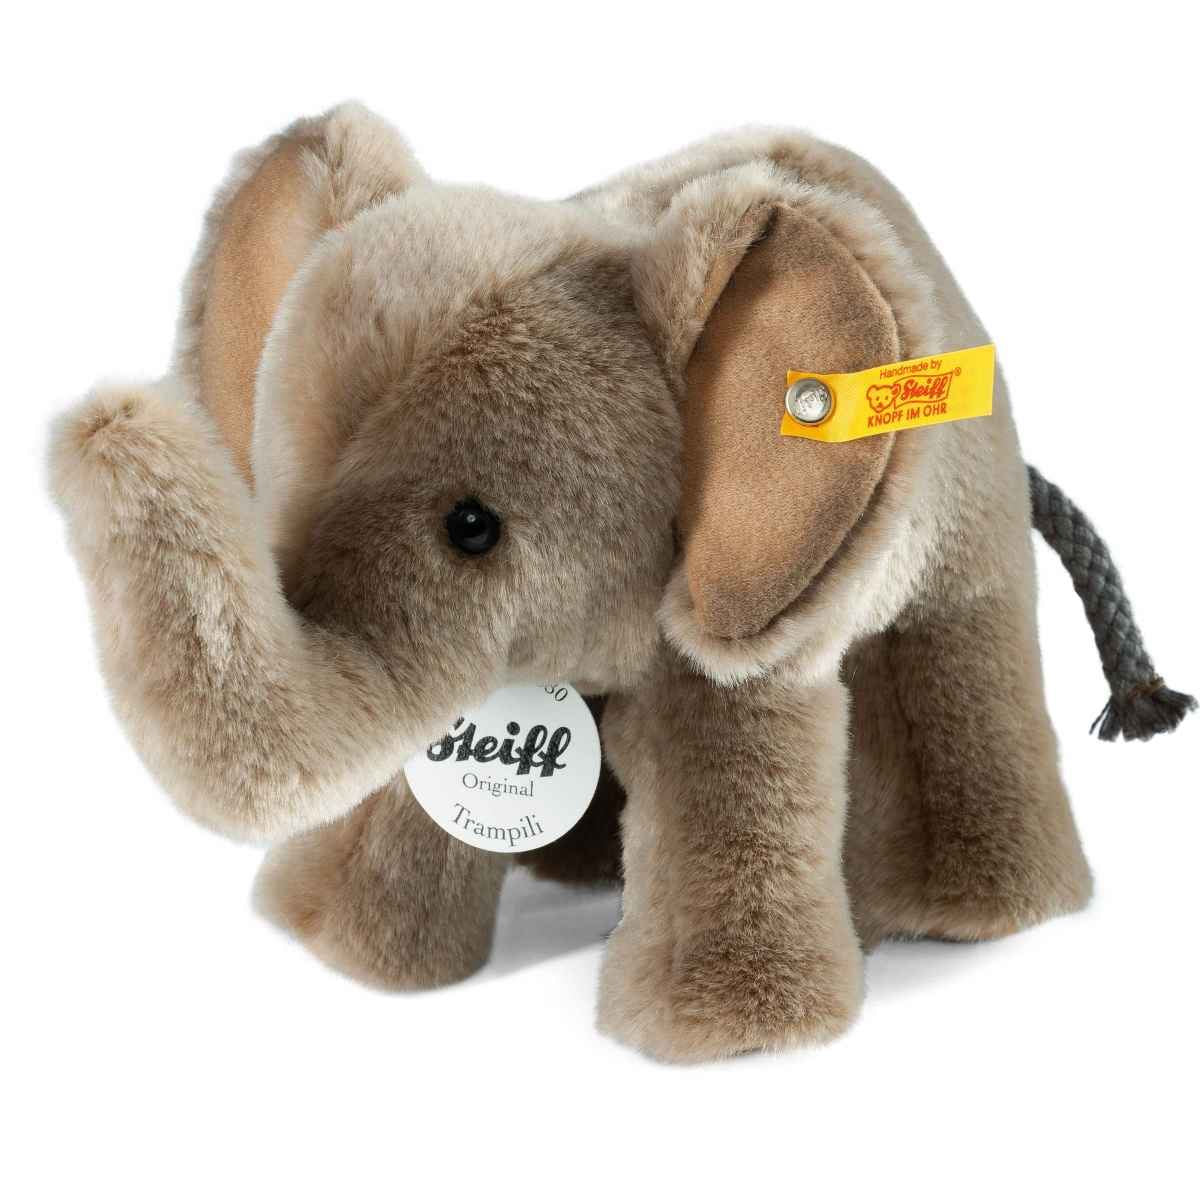 Steiff 18cm Light Grey Trampili Elephant